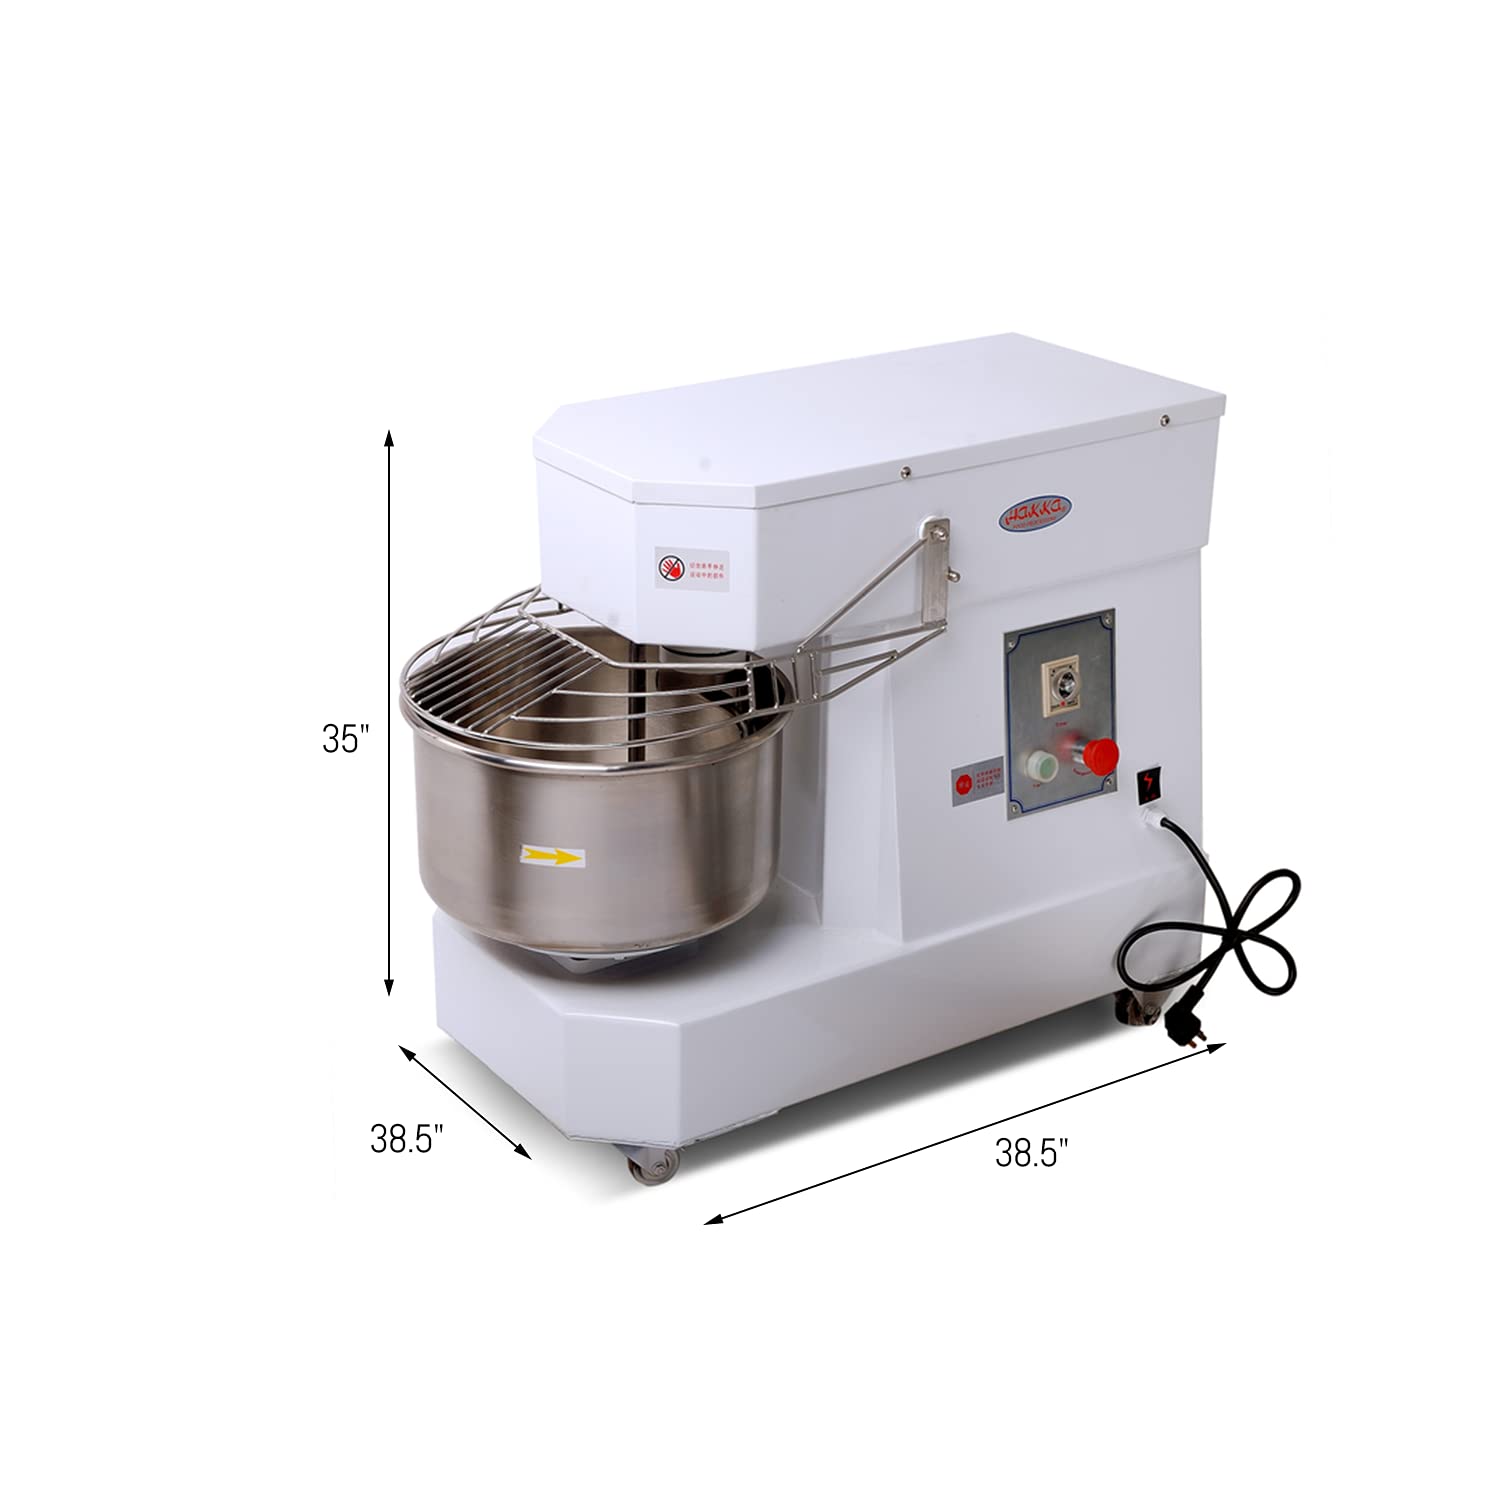 8 kg Spiral mixer machine & Dough mixer demo video for bakery 